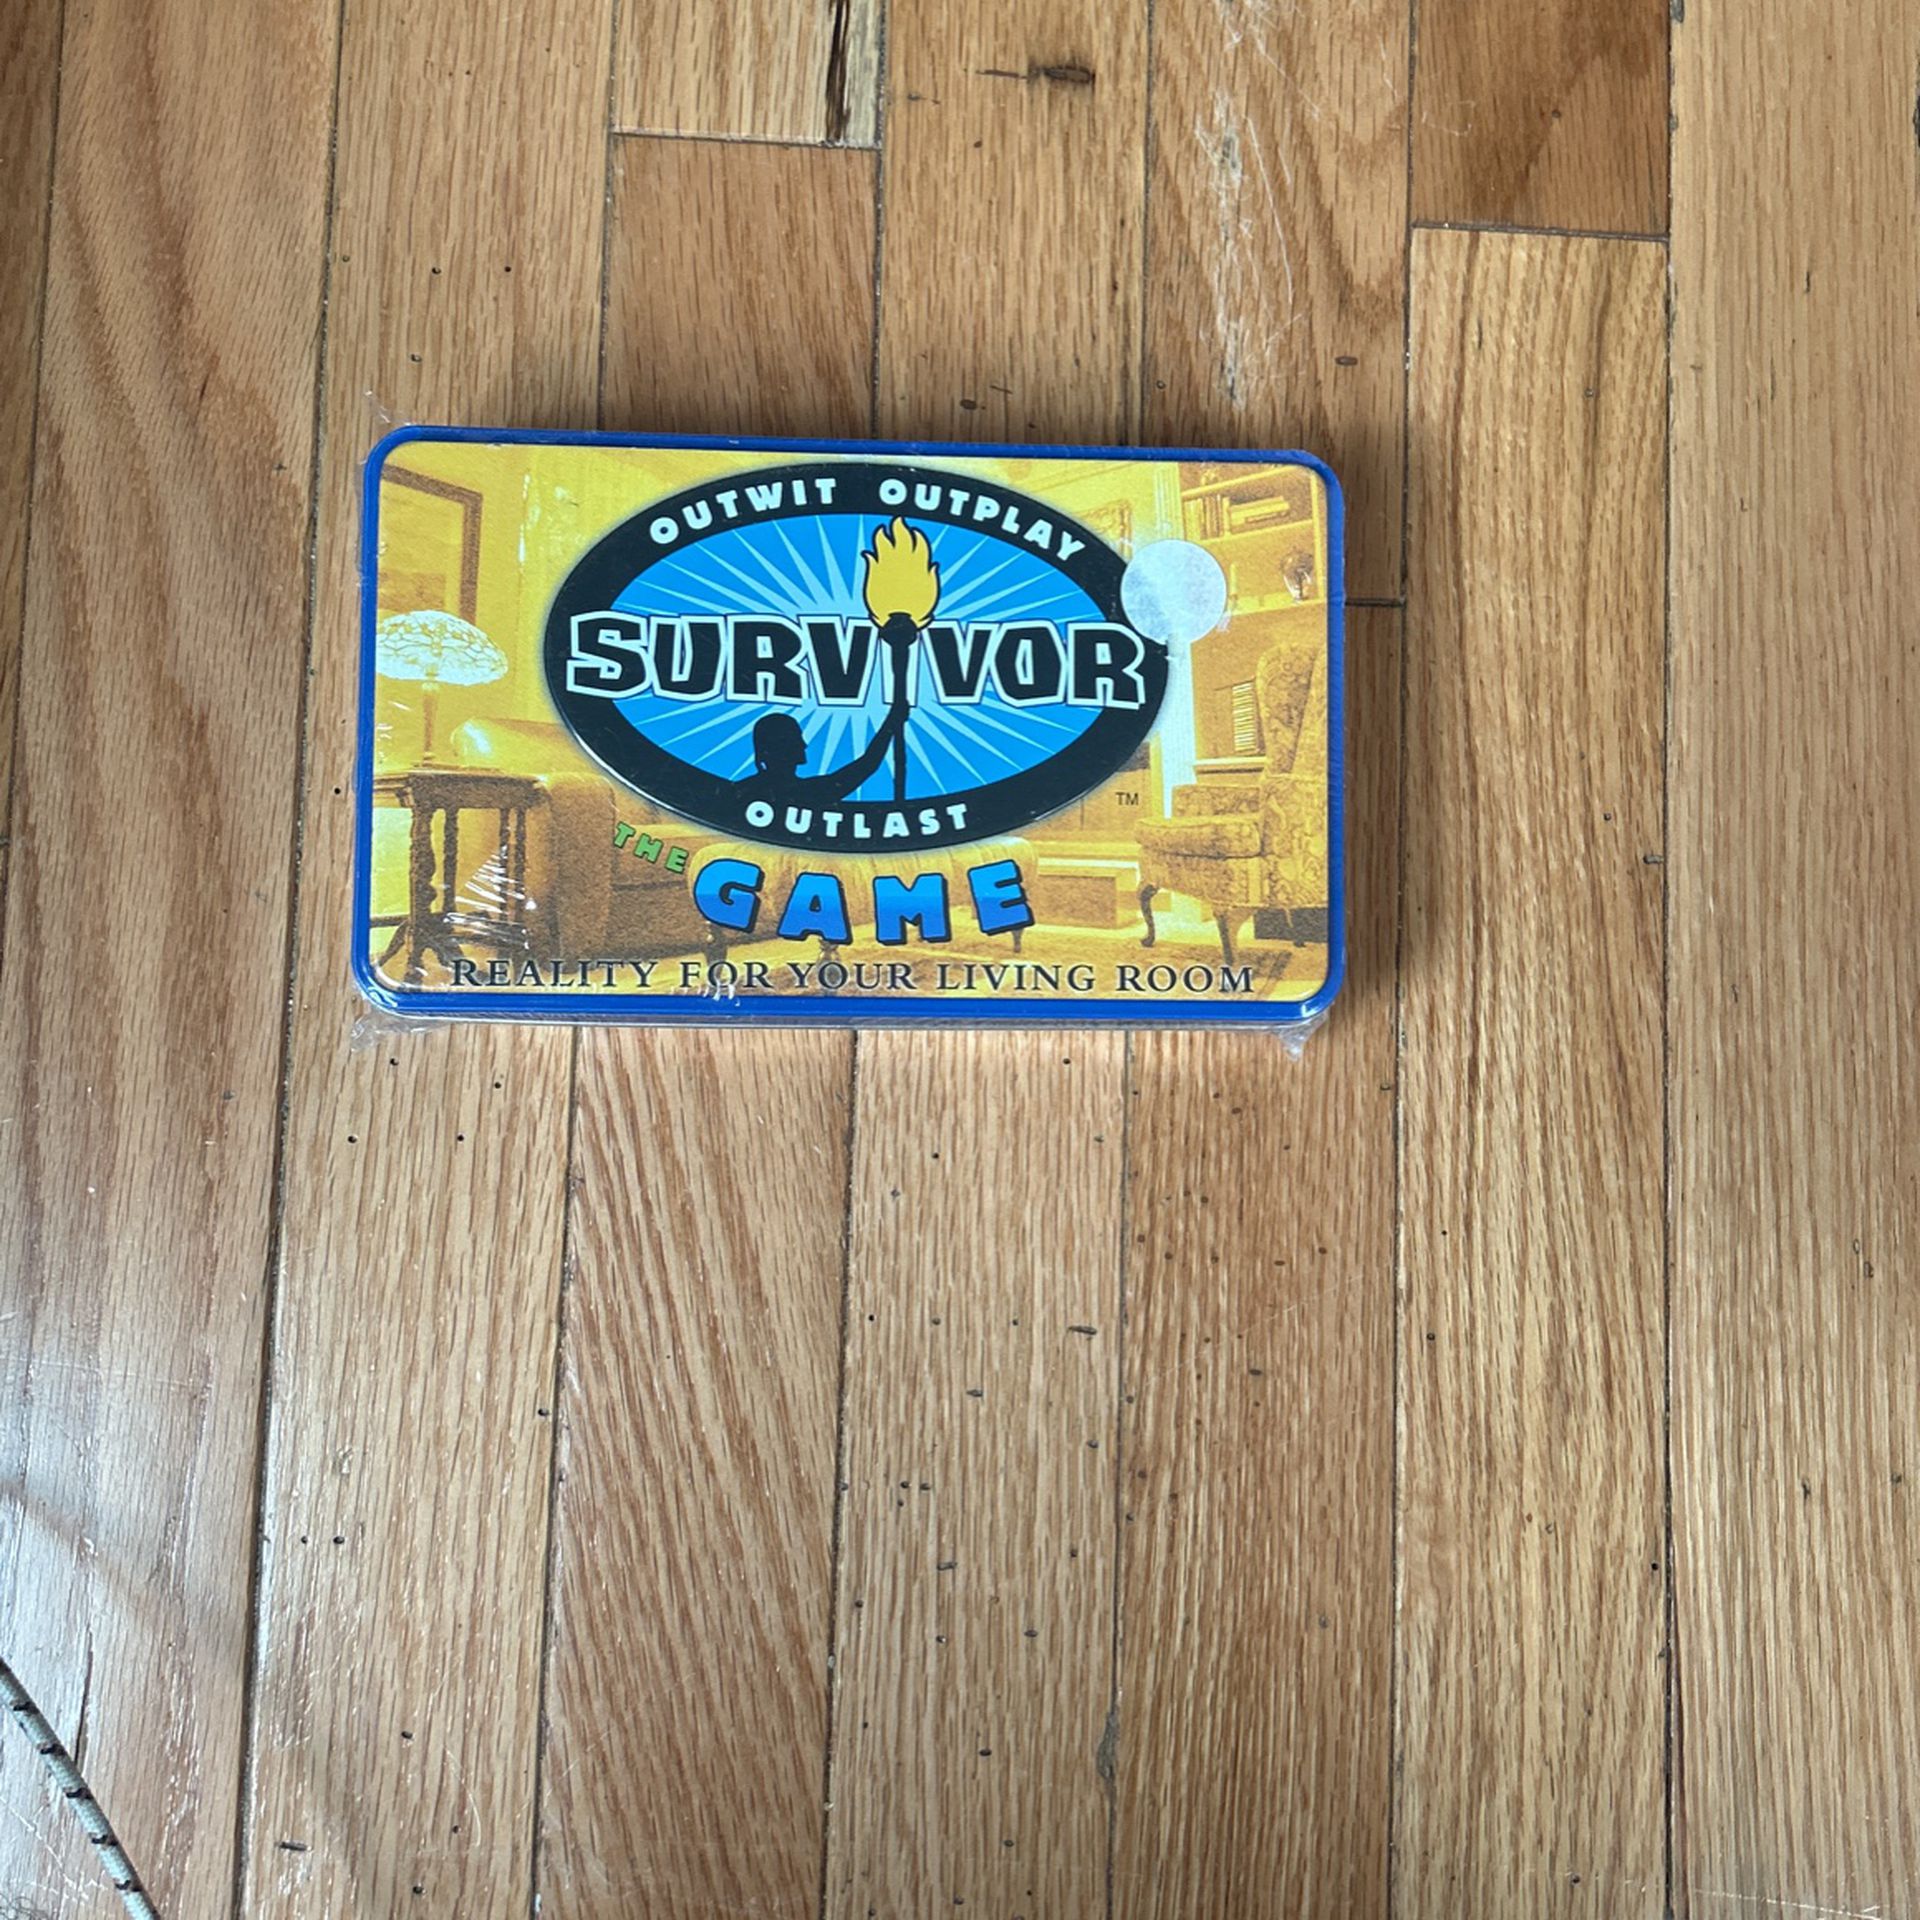 New Survivor outlast Game 